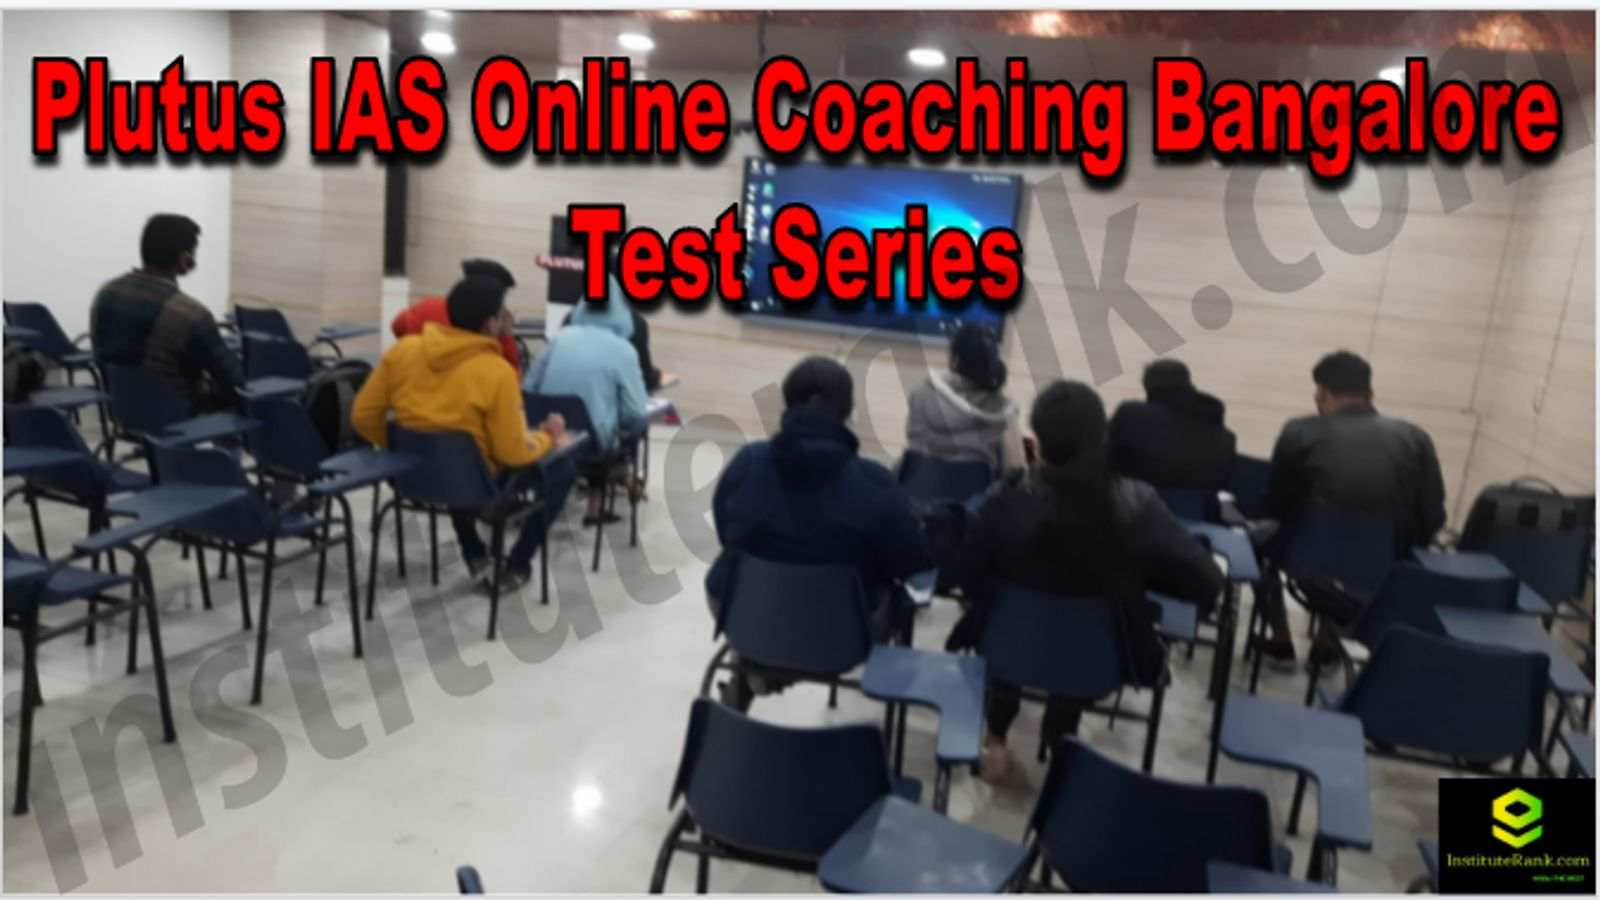 Plutus IAS Online Coaching Bangalore Reviews Test Series